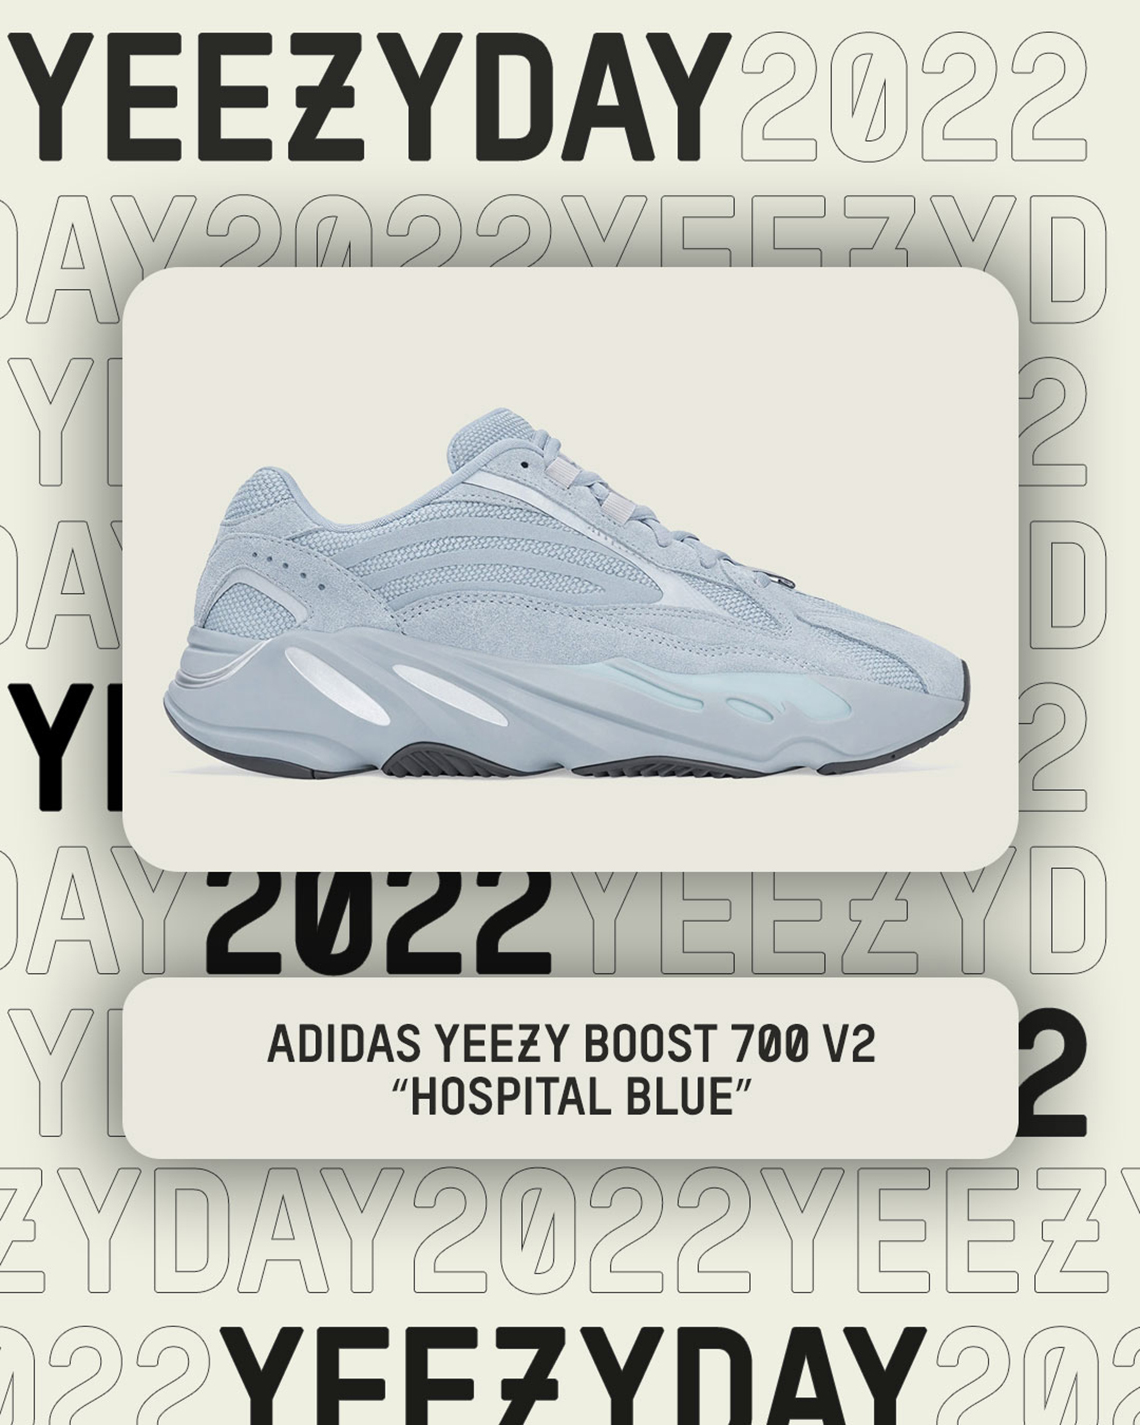 adidas Yeezy Boost 350 V3 Releasing in 2019